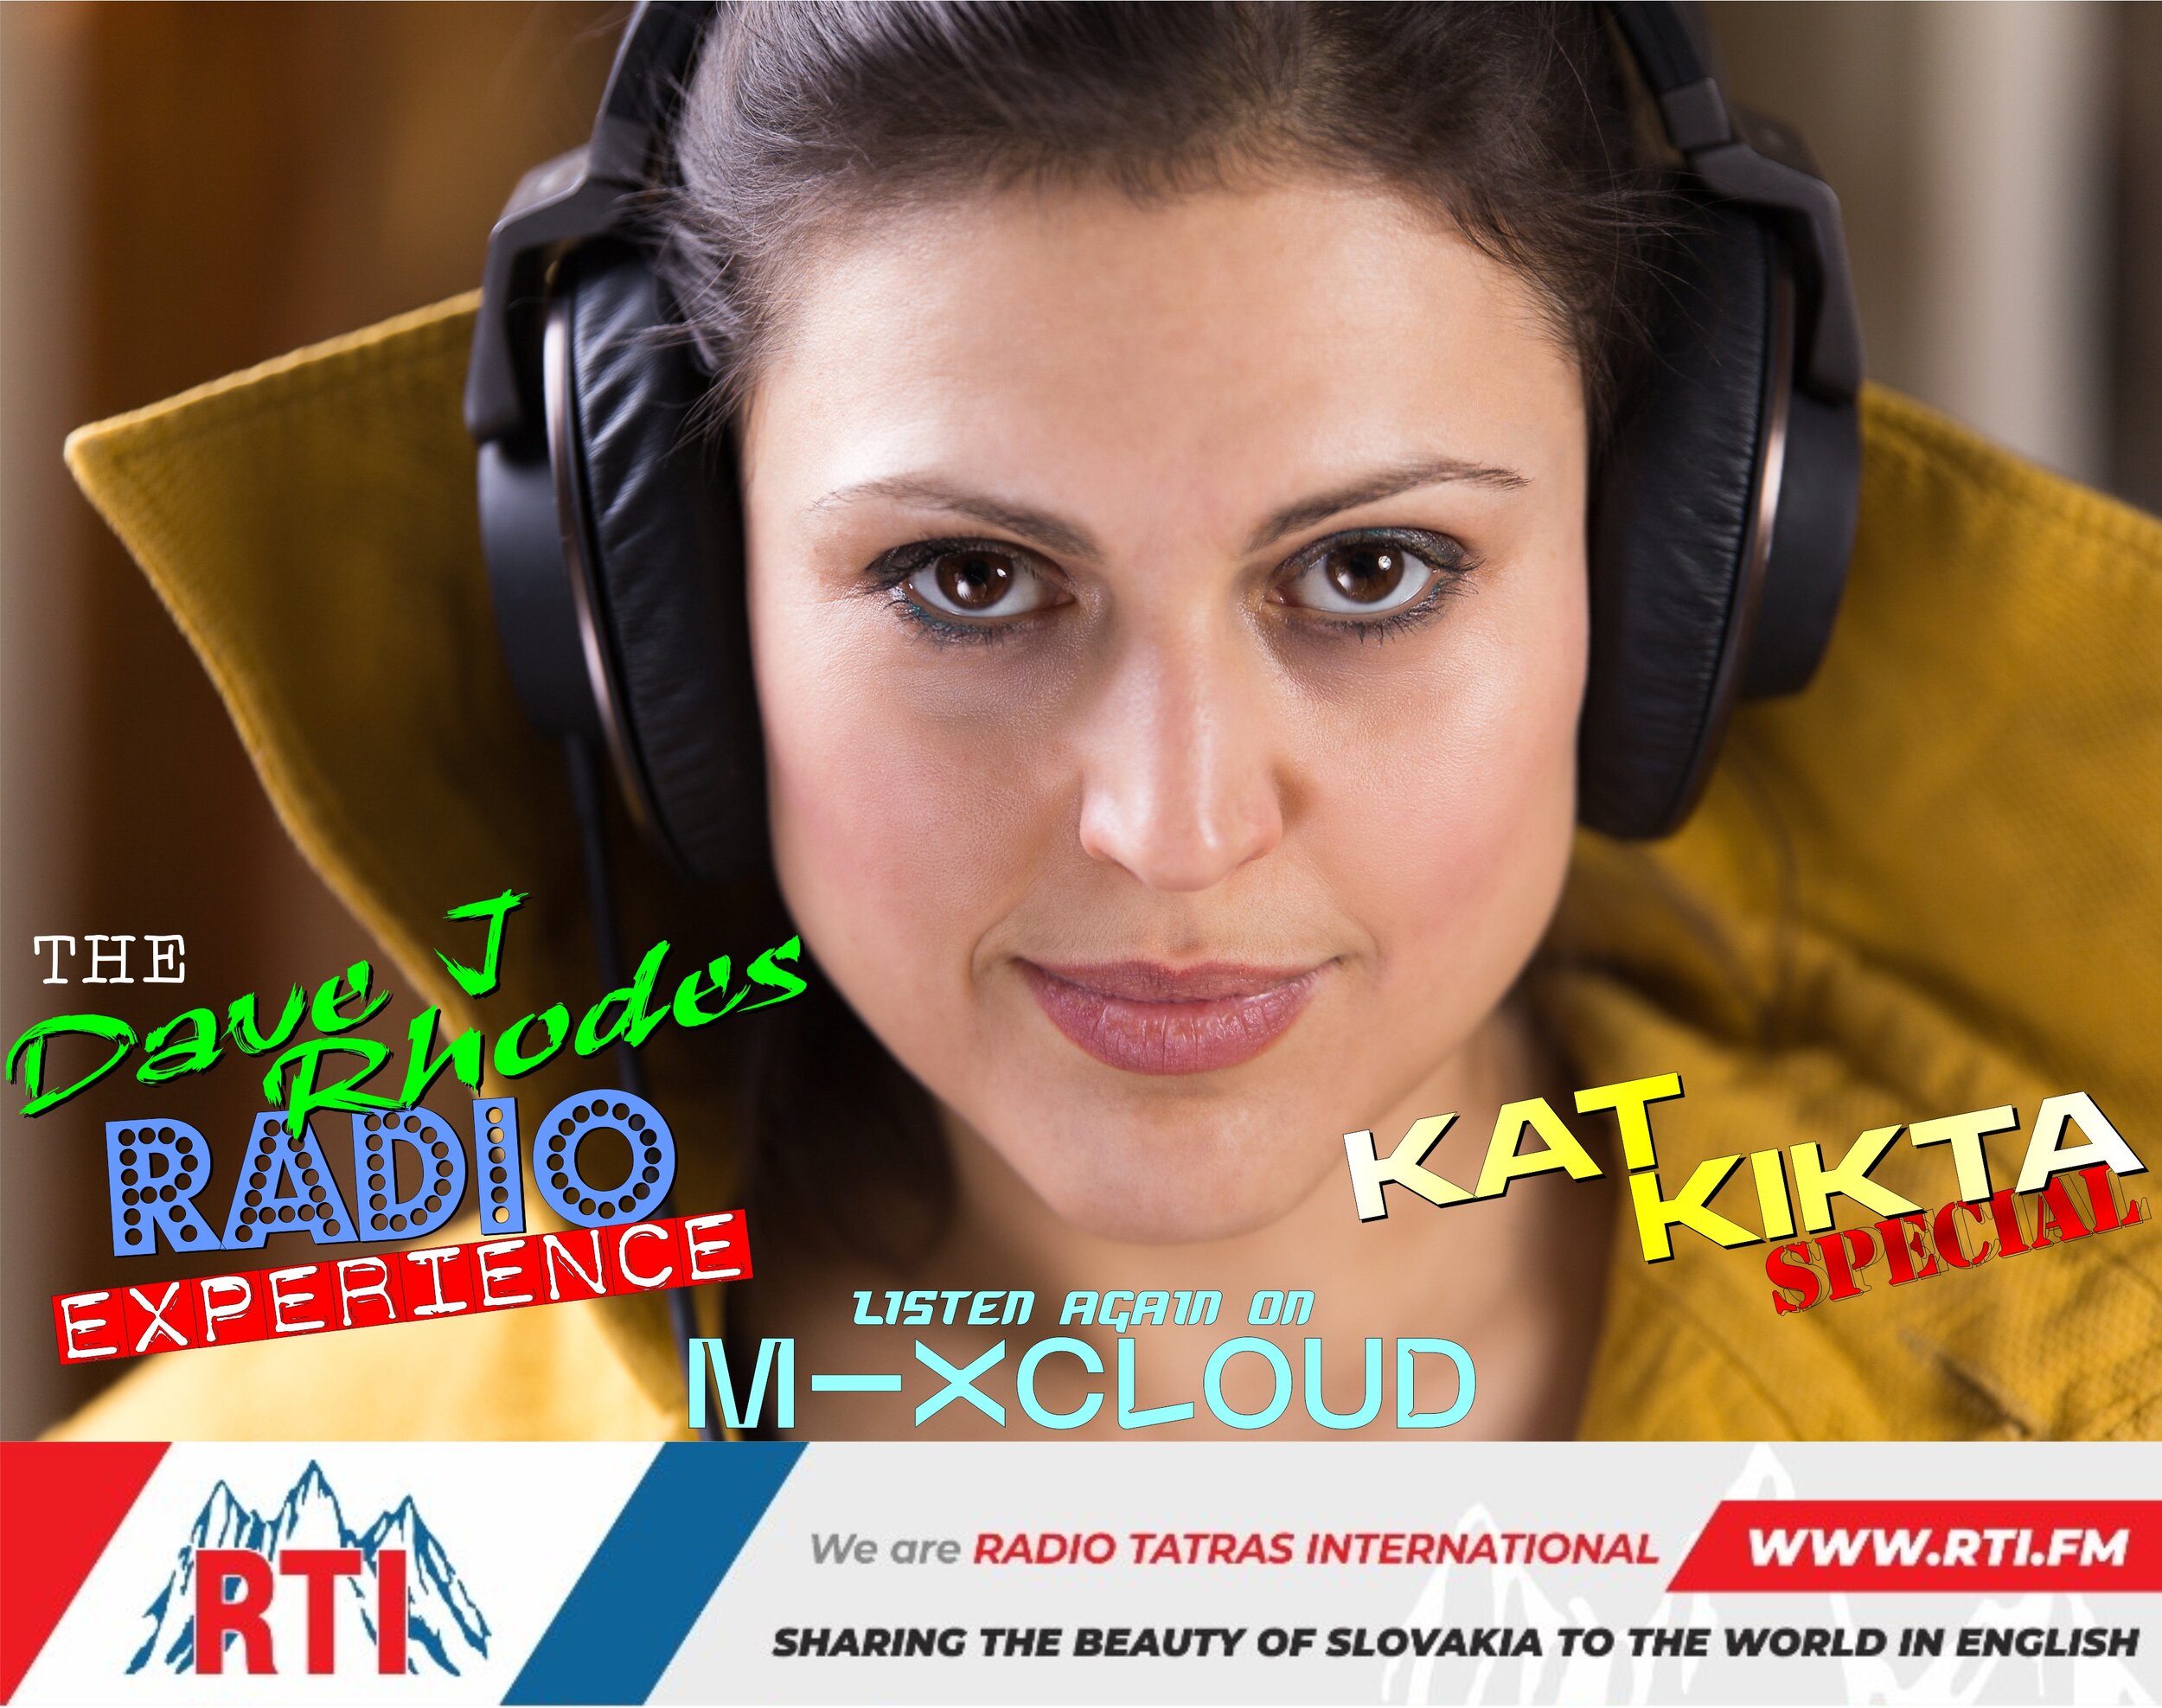 Radio Experiance - Kat Kikta mixcloud.jpg